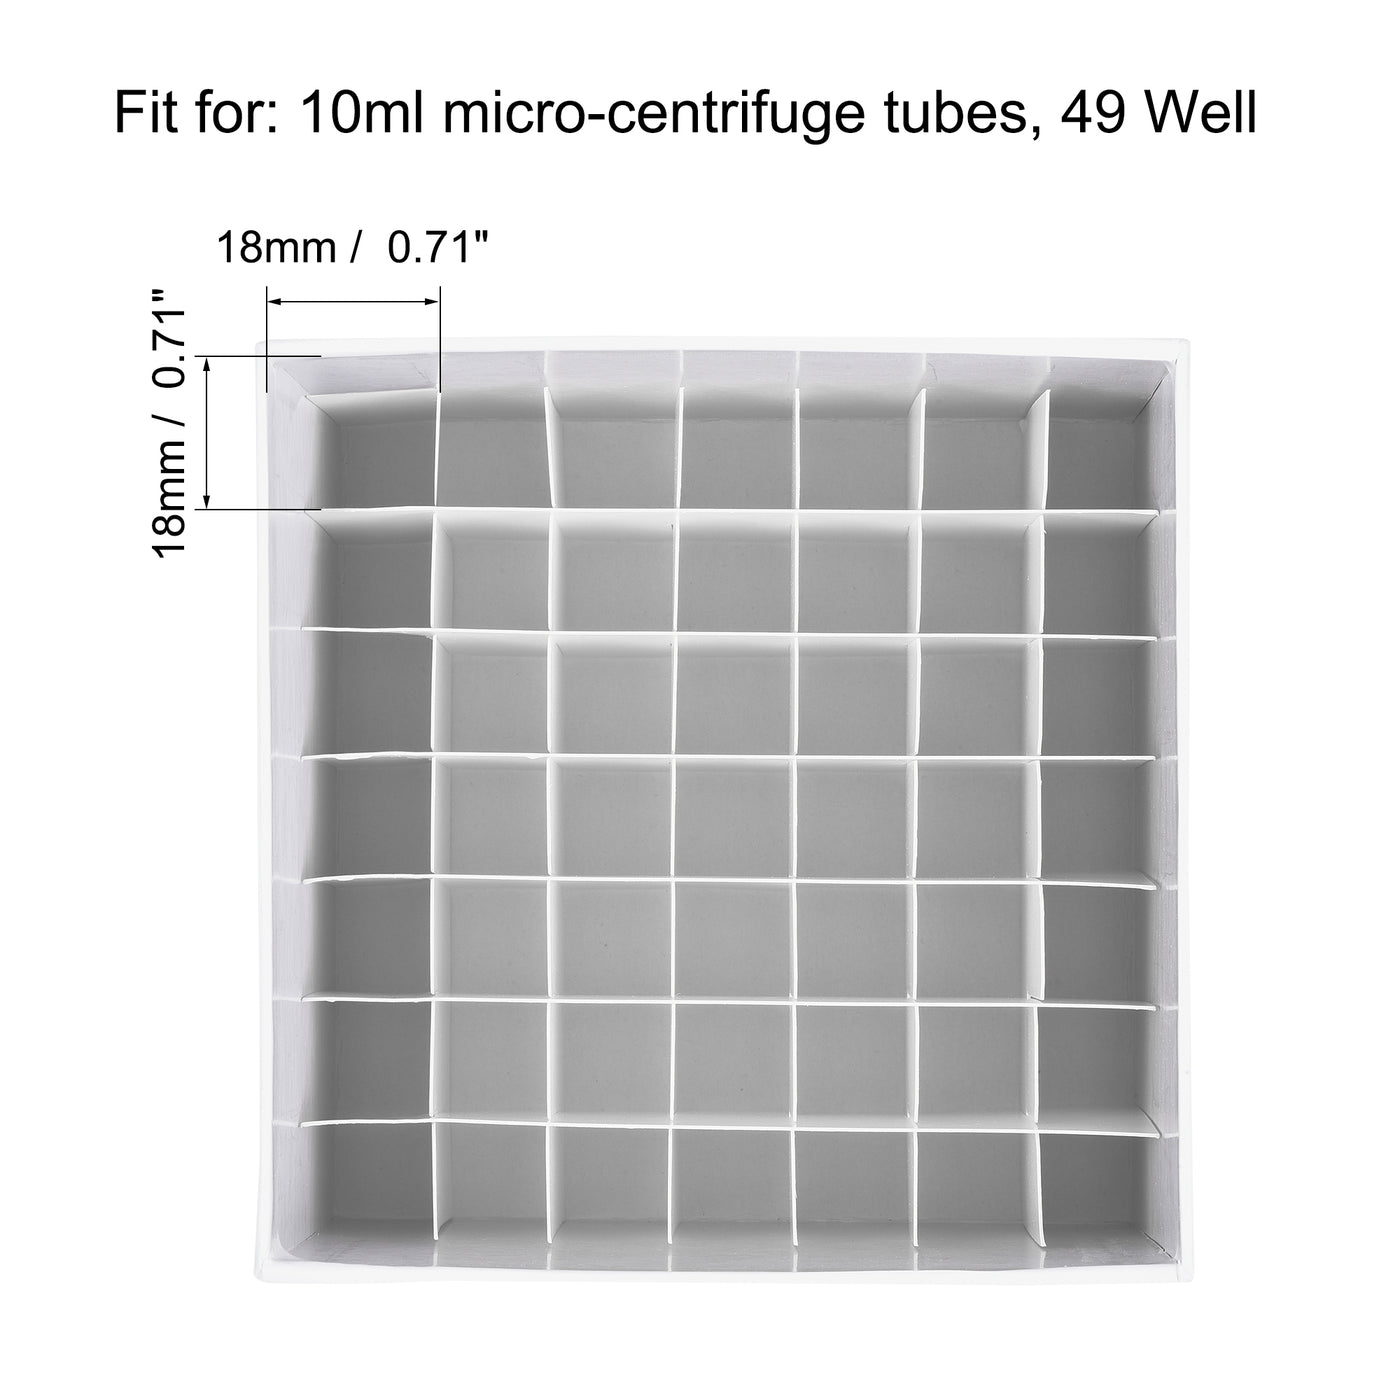 uxcell Uxcell Centrifuge Tube Freezer Holder 49-Well Cardboard White for 10ml 18mm Dia Tubes